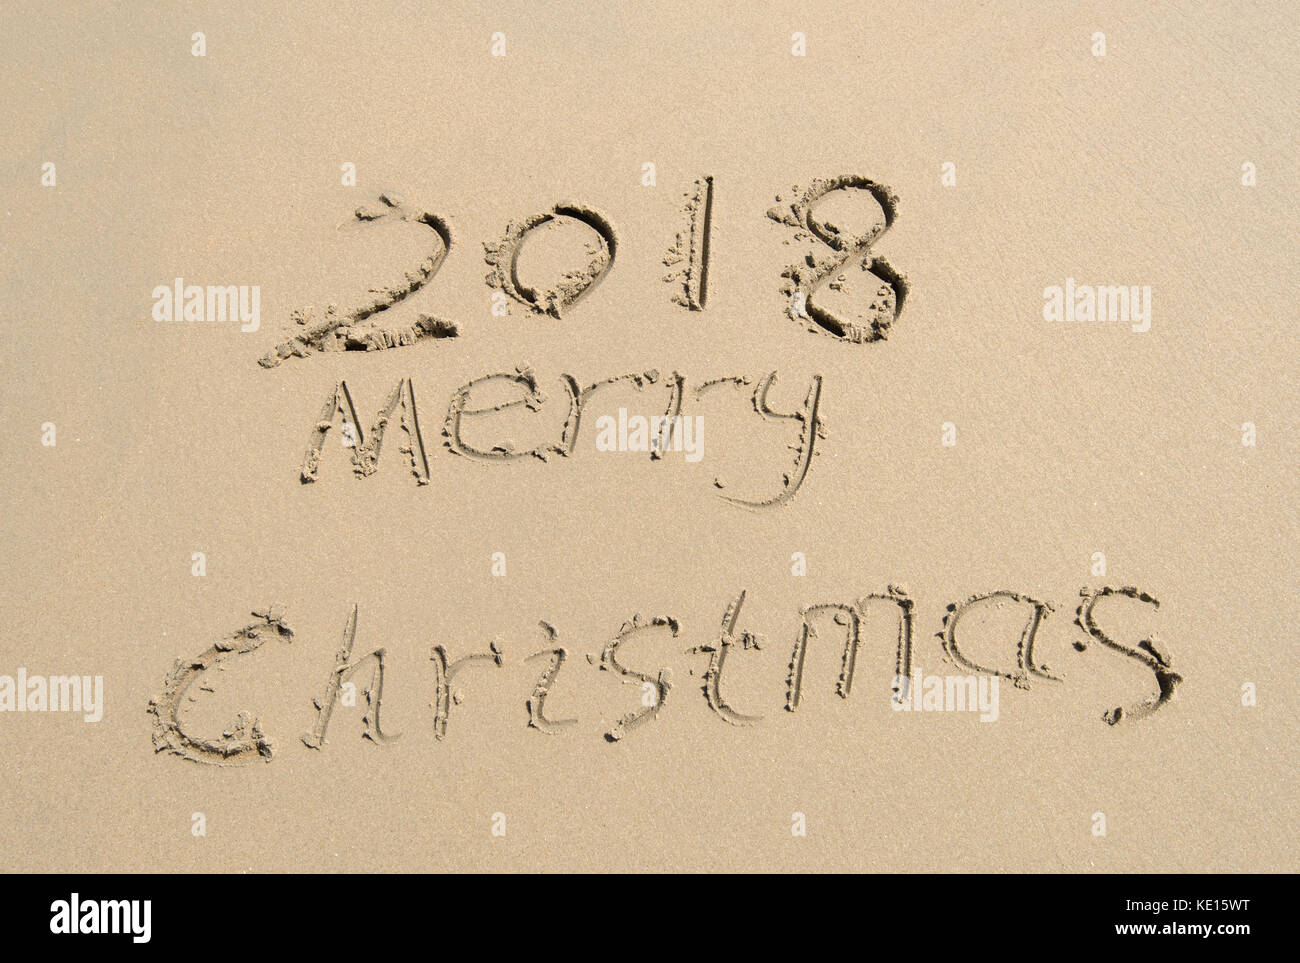 2018 Merry Christmas handwritten in sand on beach Stock Photo